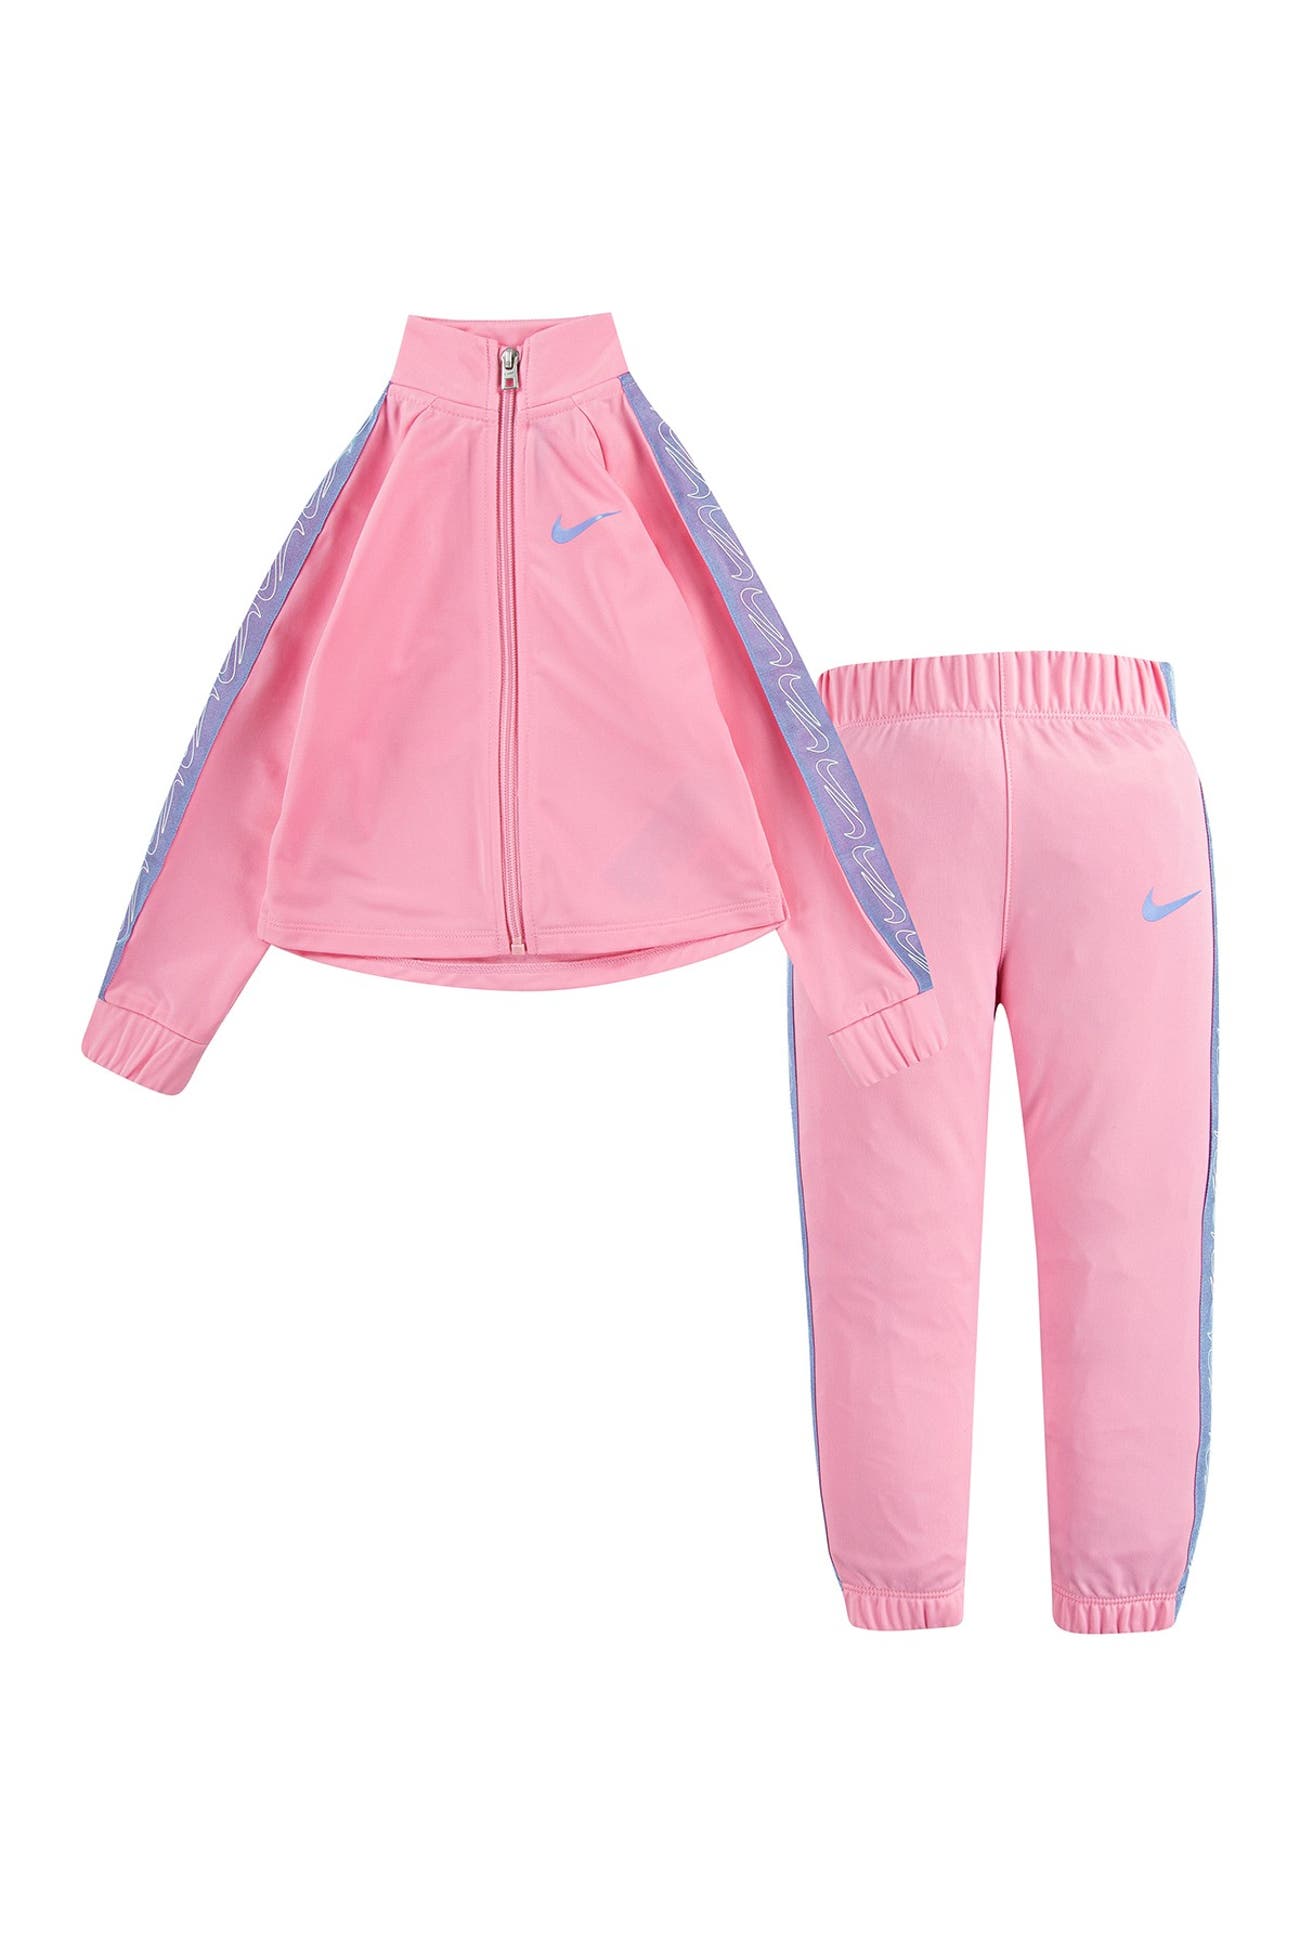 Nike | Full-Zip Jacket and Pants 2-Piece Track Set | Nordstrom Rack